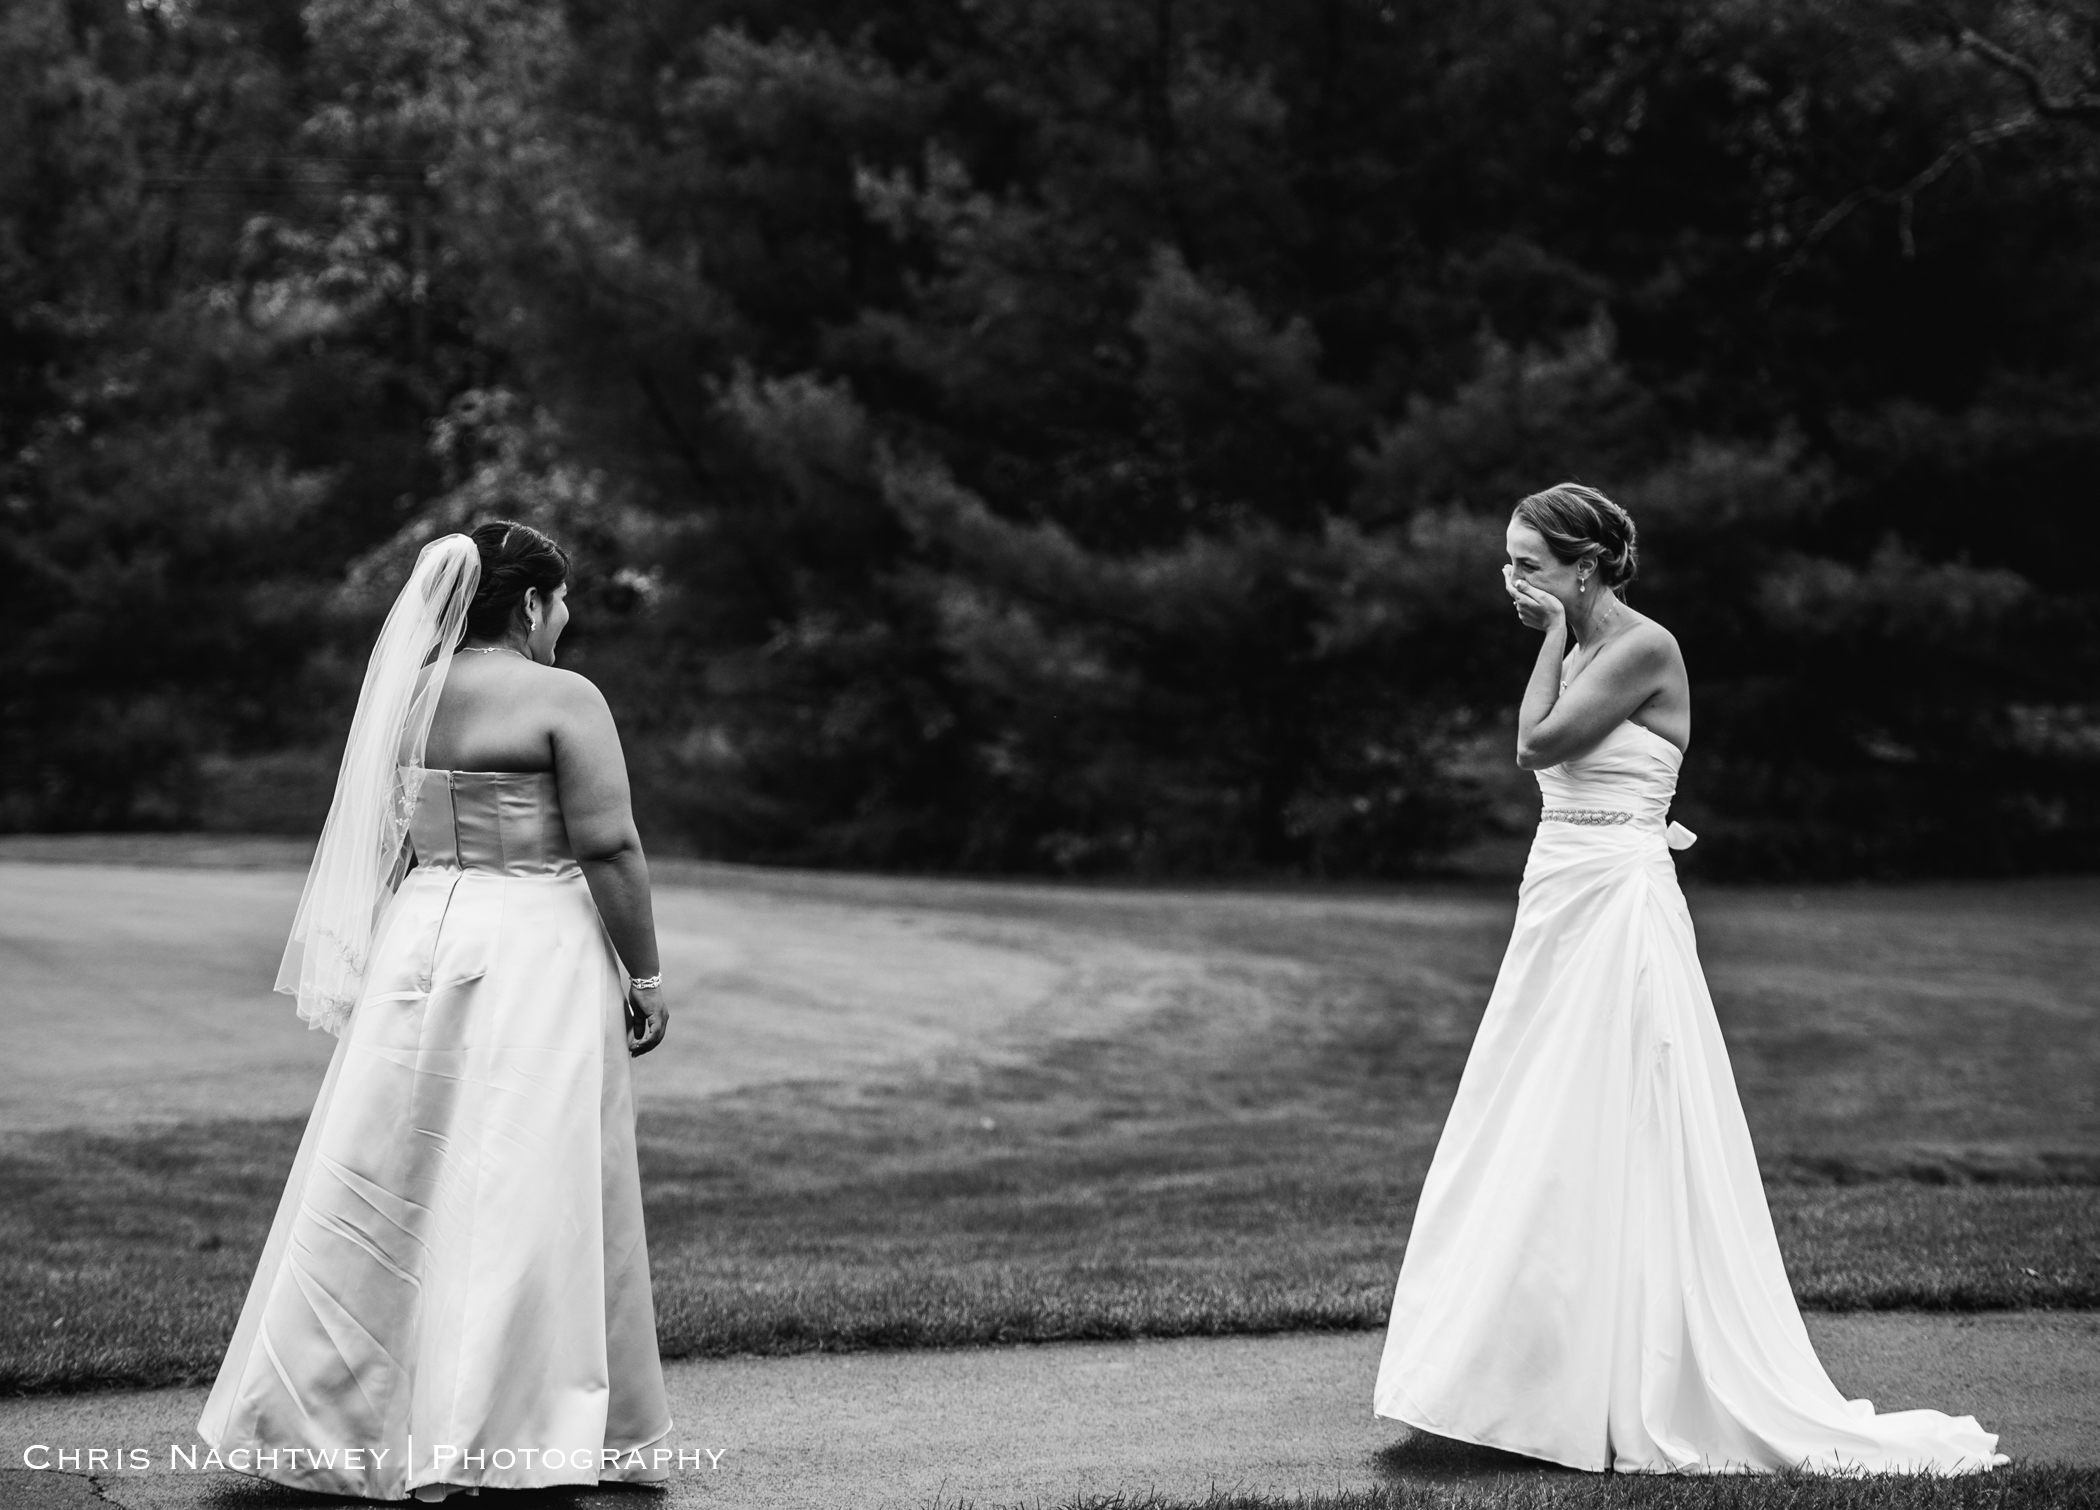 connecticut-same-sex-wedding-photographers-chris-nachtwey-2018-lisa-karina-1.jpg